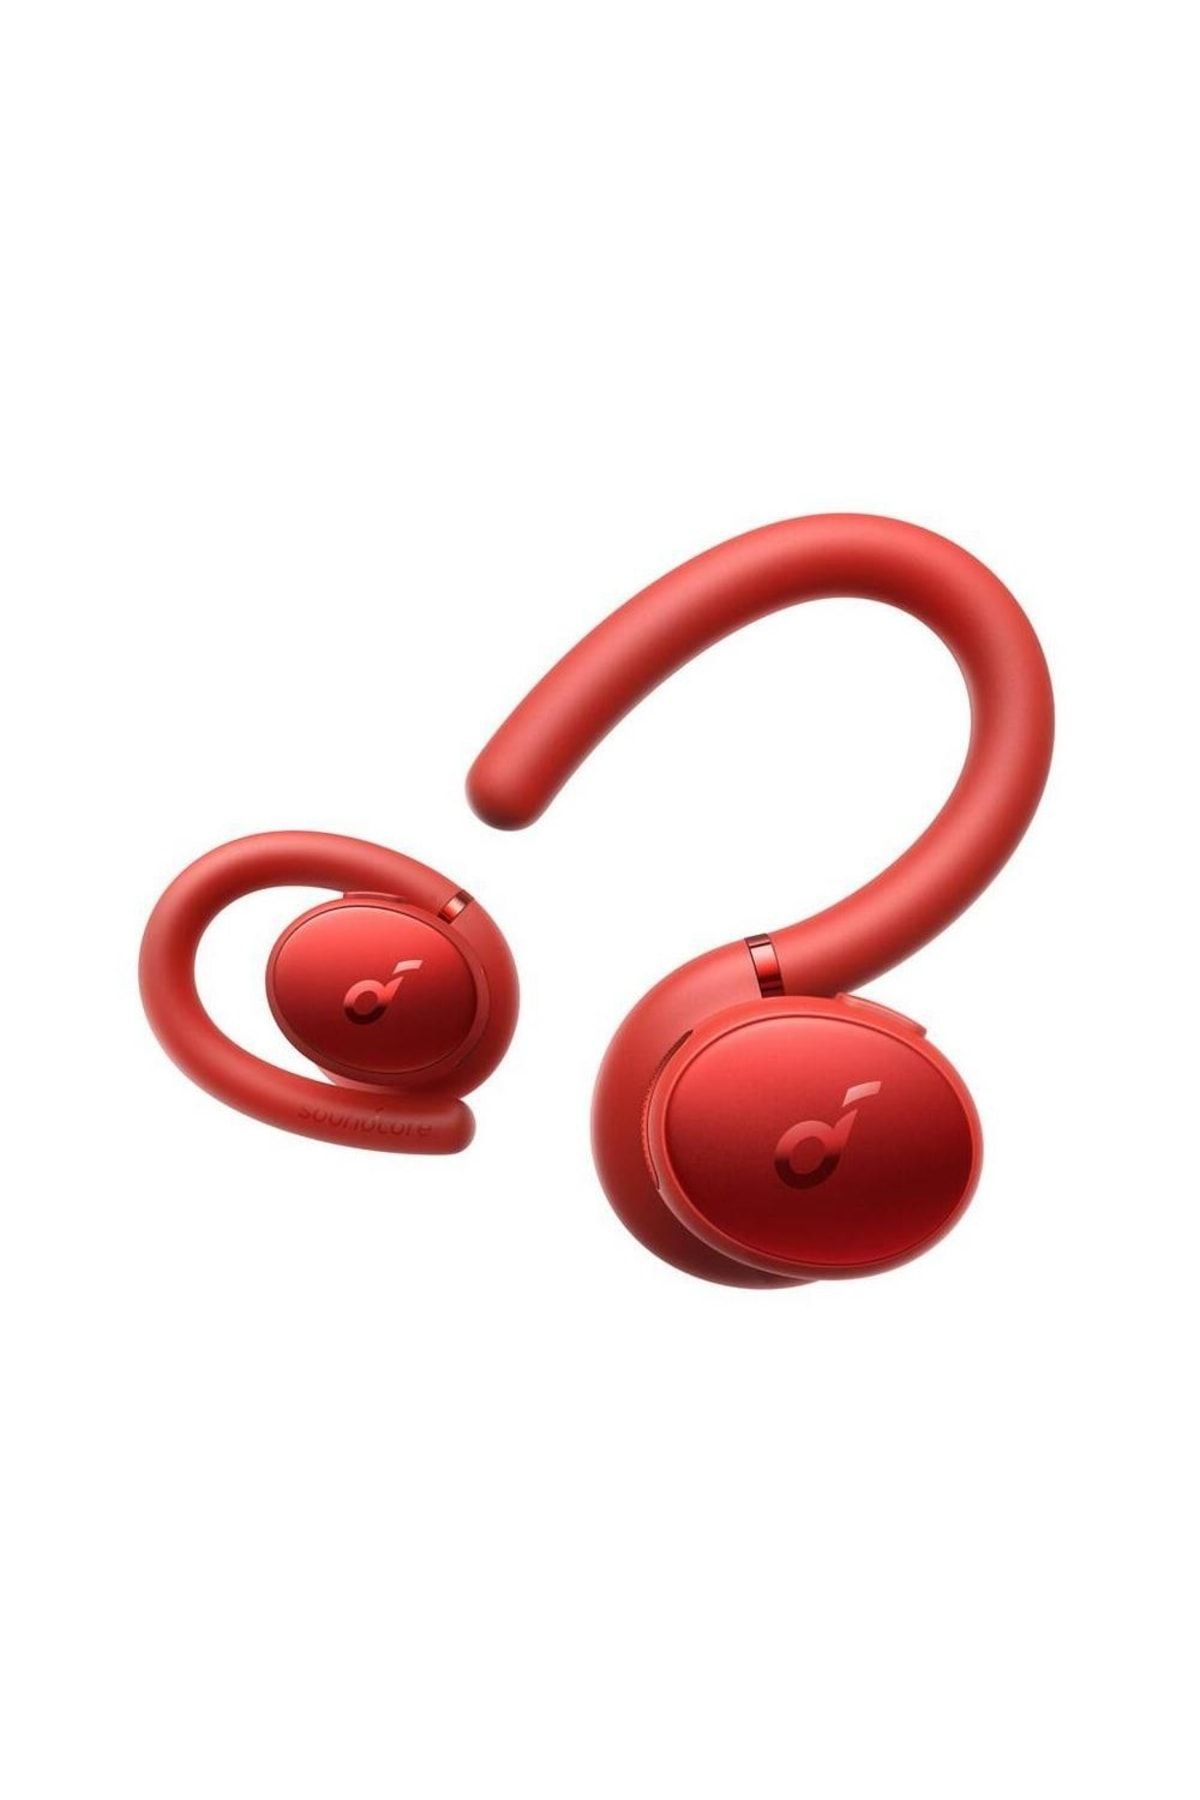 Anker Soundcore Sport X10 Bluetooth Kulak Içi Kulaklık - Kırmızı